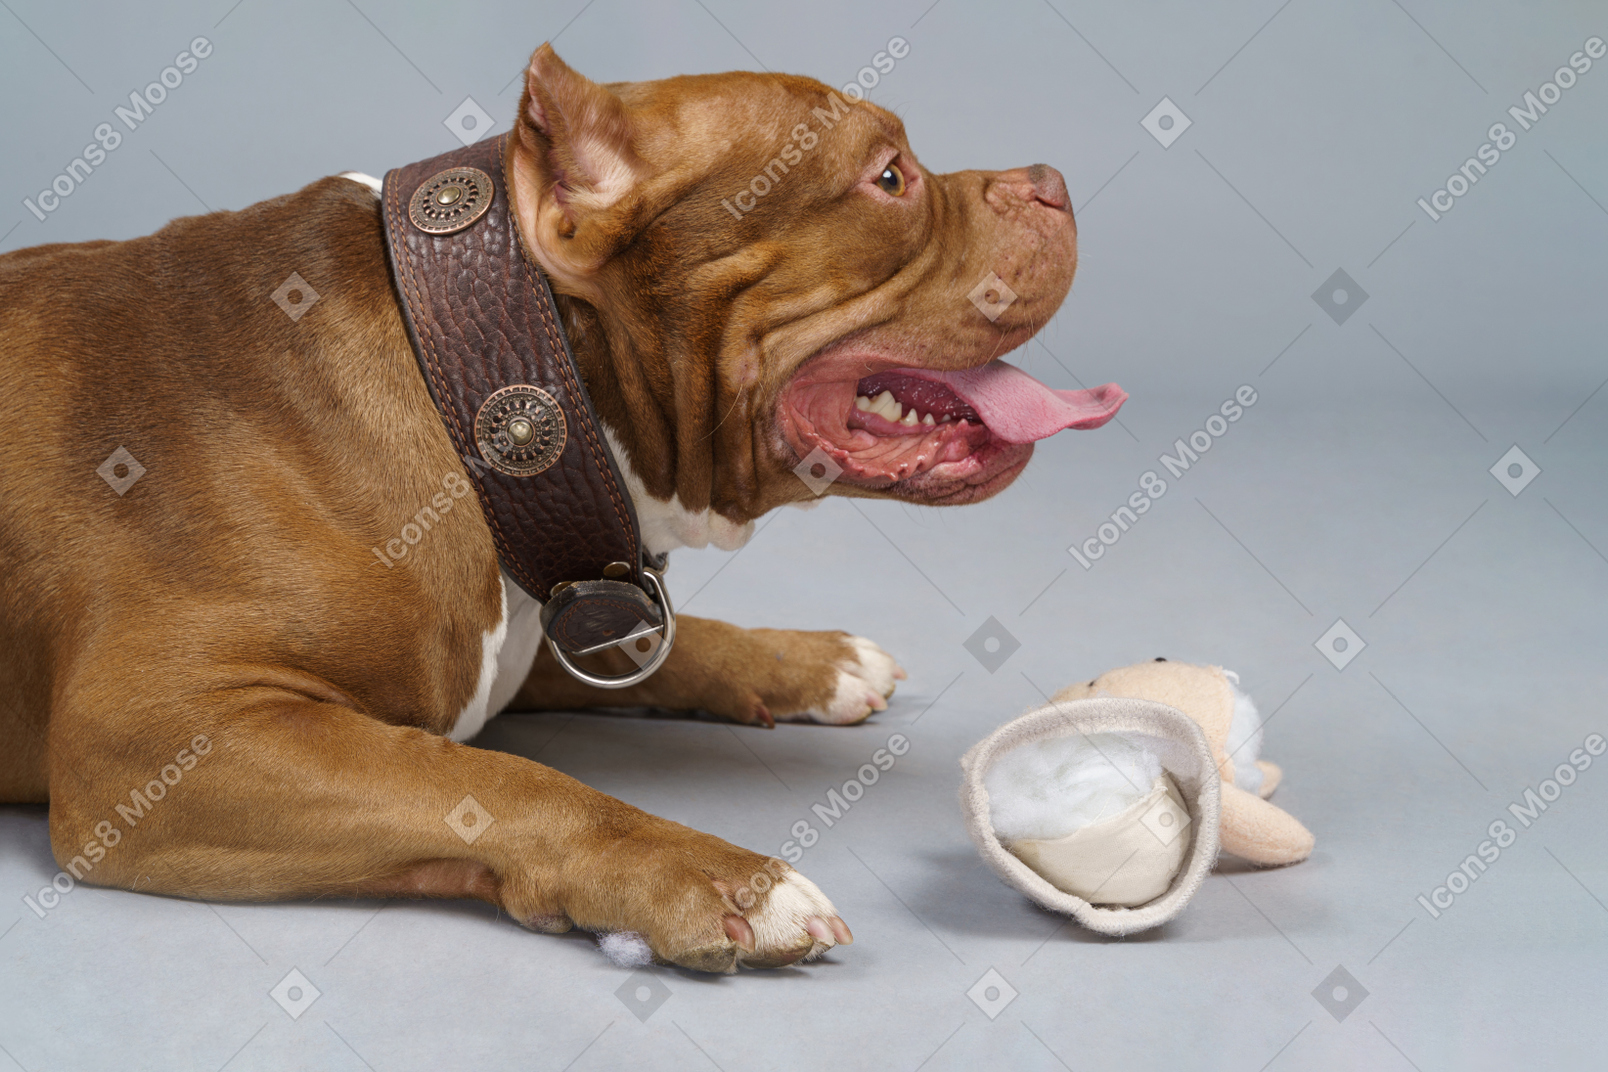 Vista lateral de un bulldog marrón con un conejito de juguete mirando a un lado